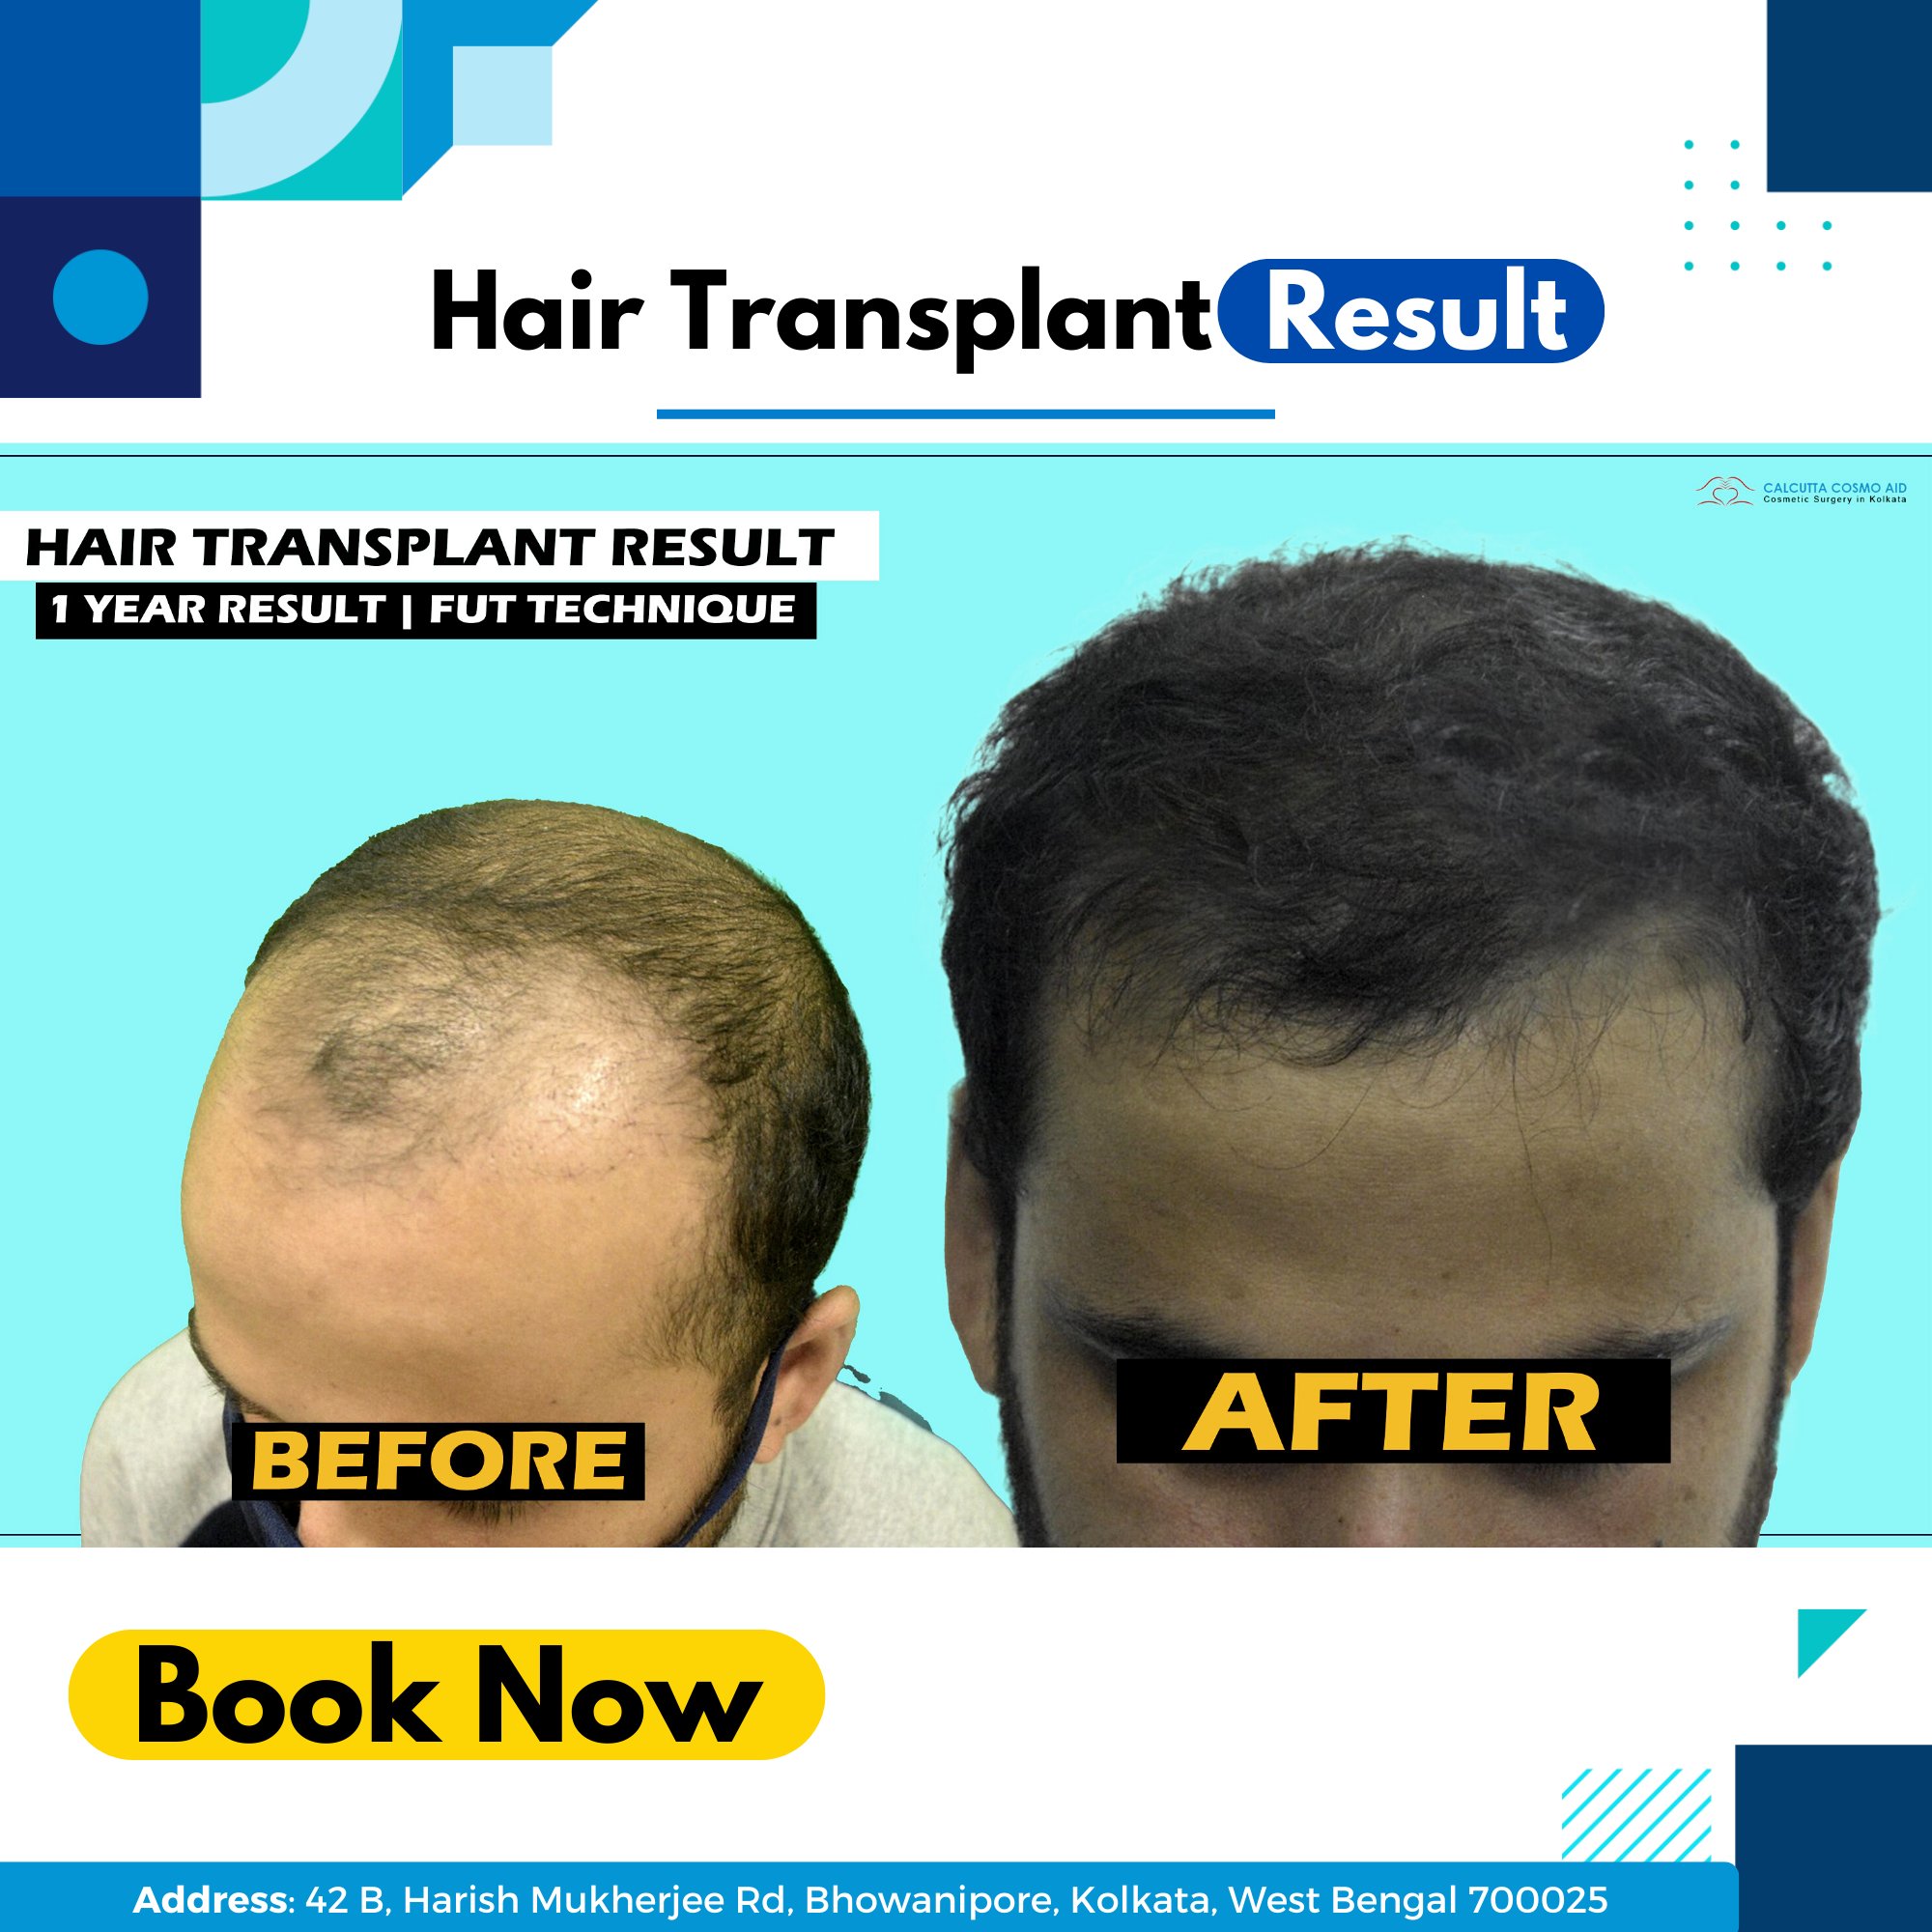 Dr Anand K Nagwani - Hair Transplant on X: Breast Augmentation is